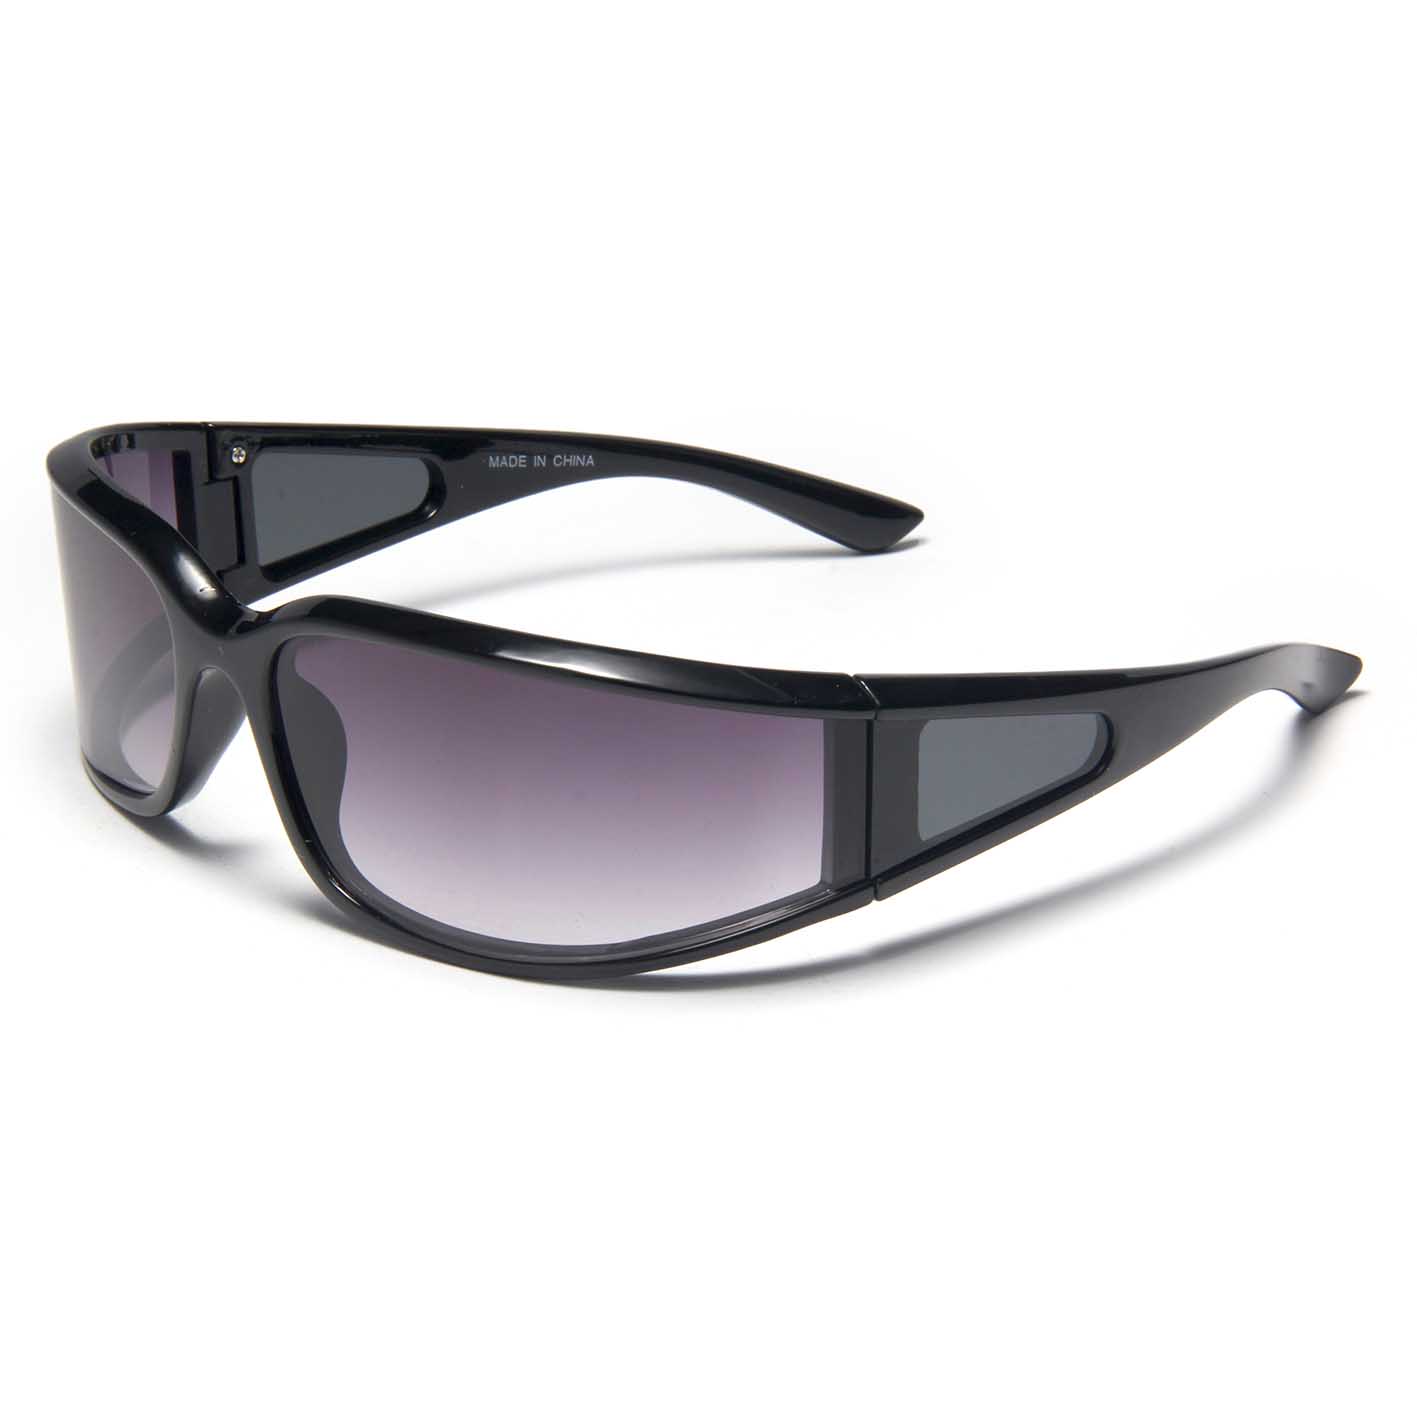 Sunglasses Manufacturer, Wholesale Sunglasses, Safe Goggles | Eugenia